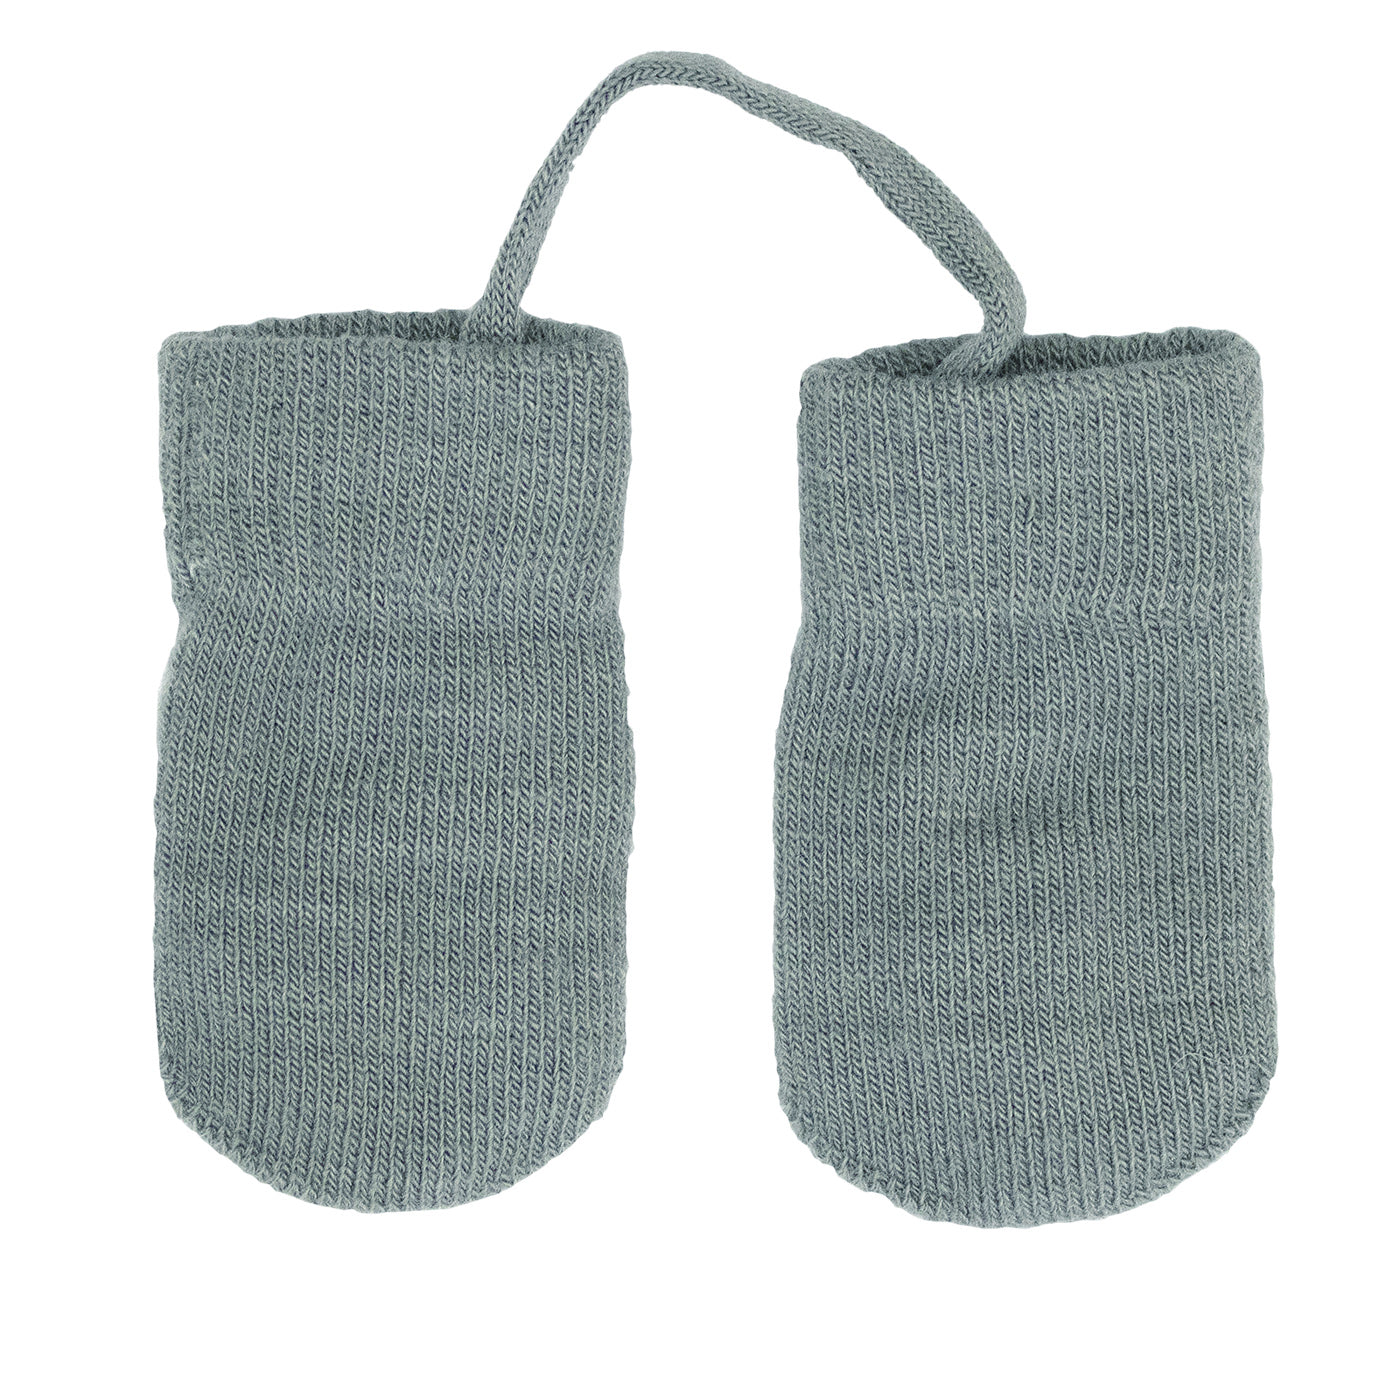 Knitted Baby Gloves - Granite